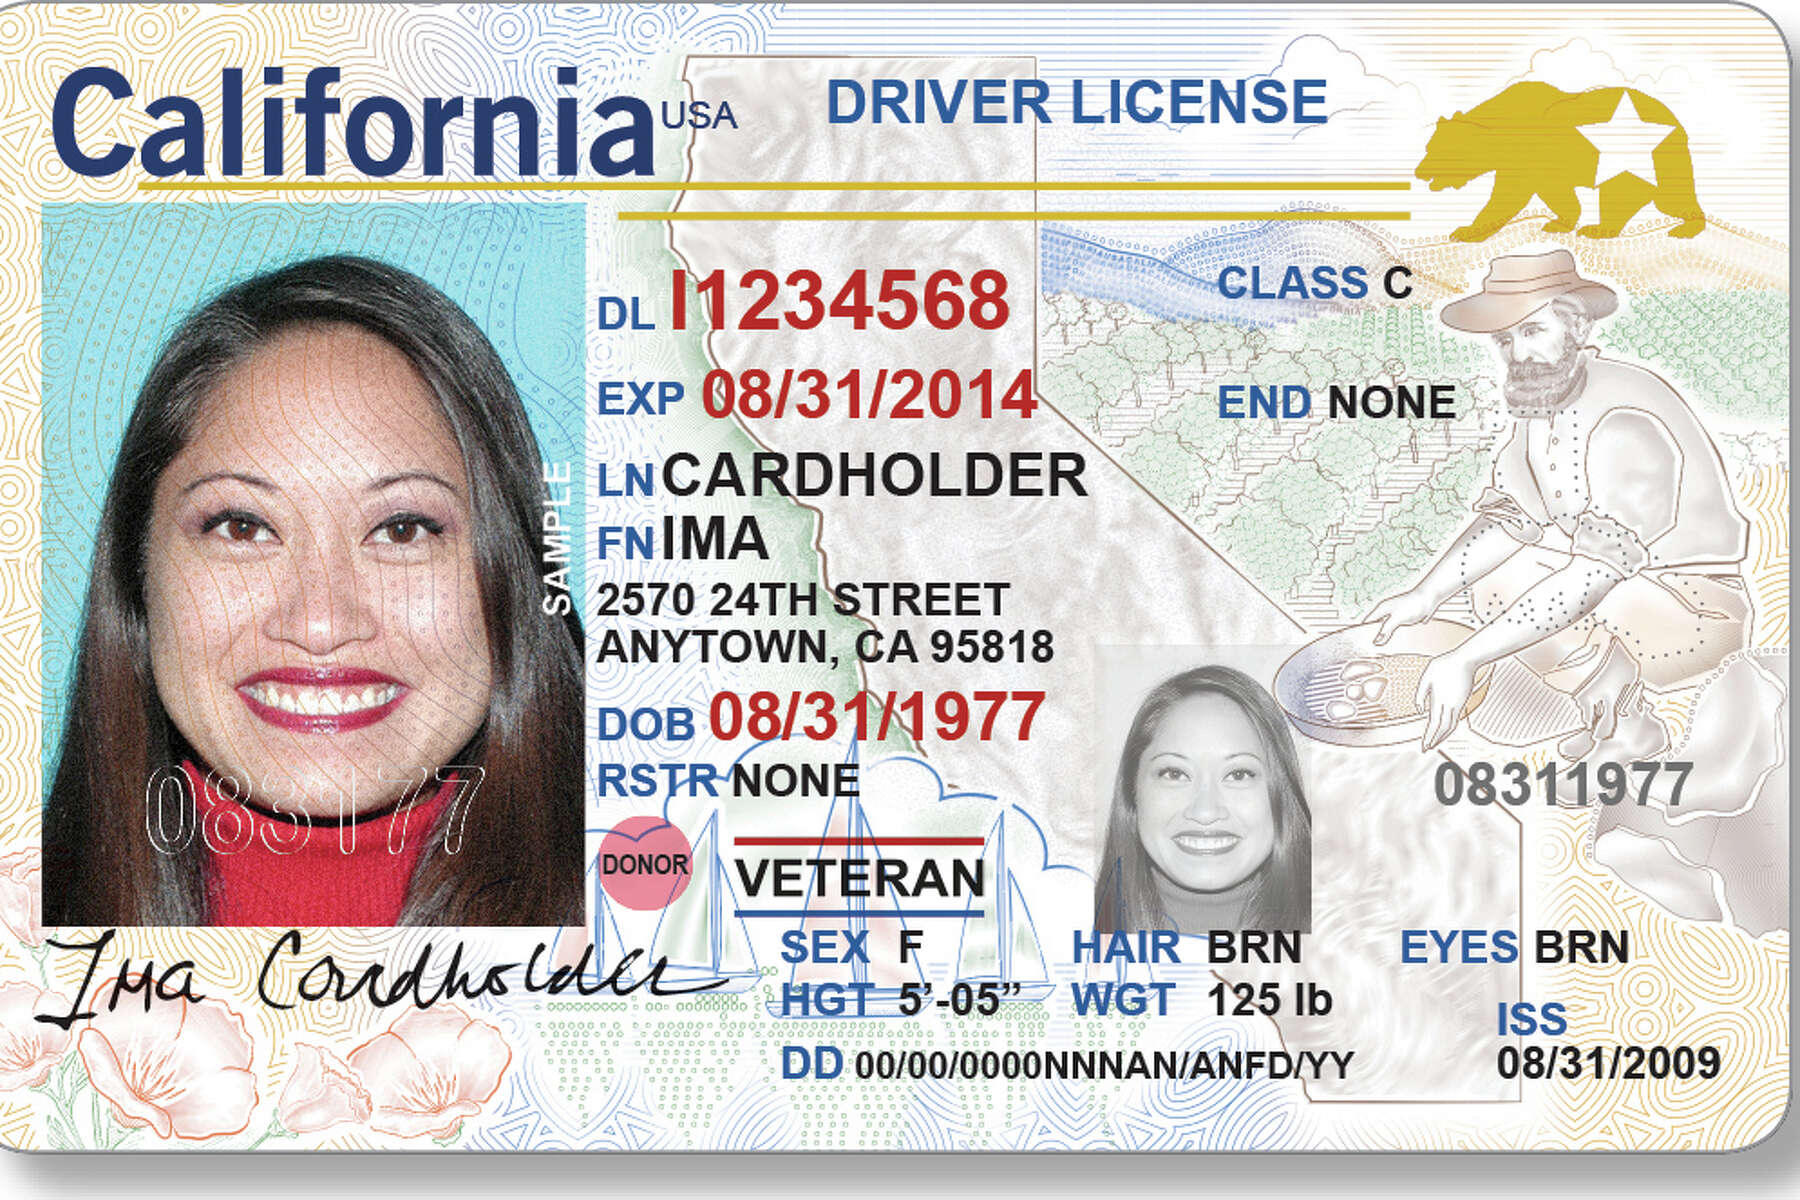 different types of licenses through the california wildlife